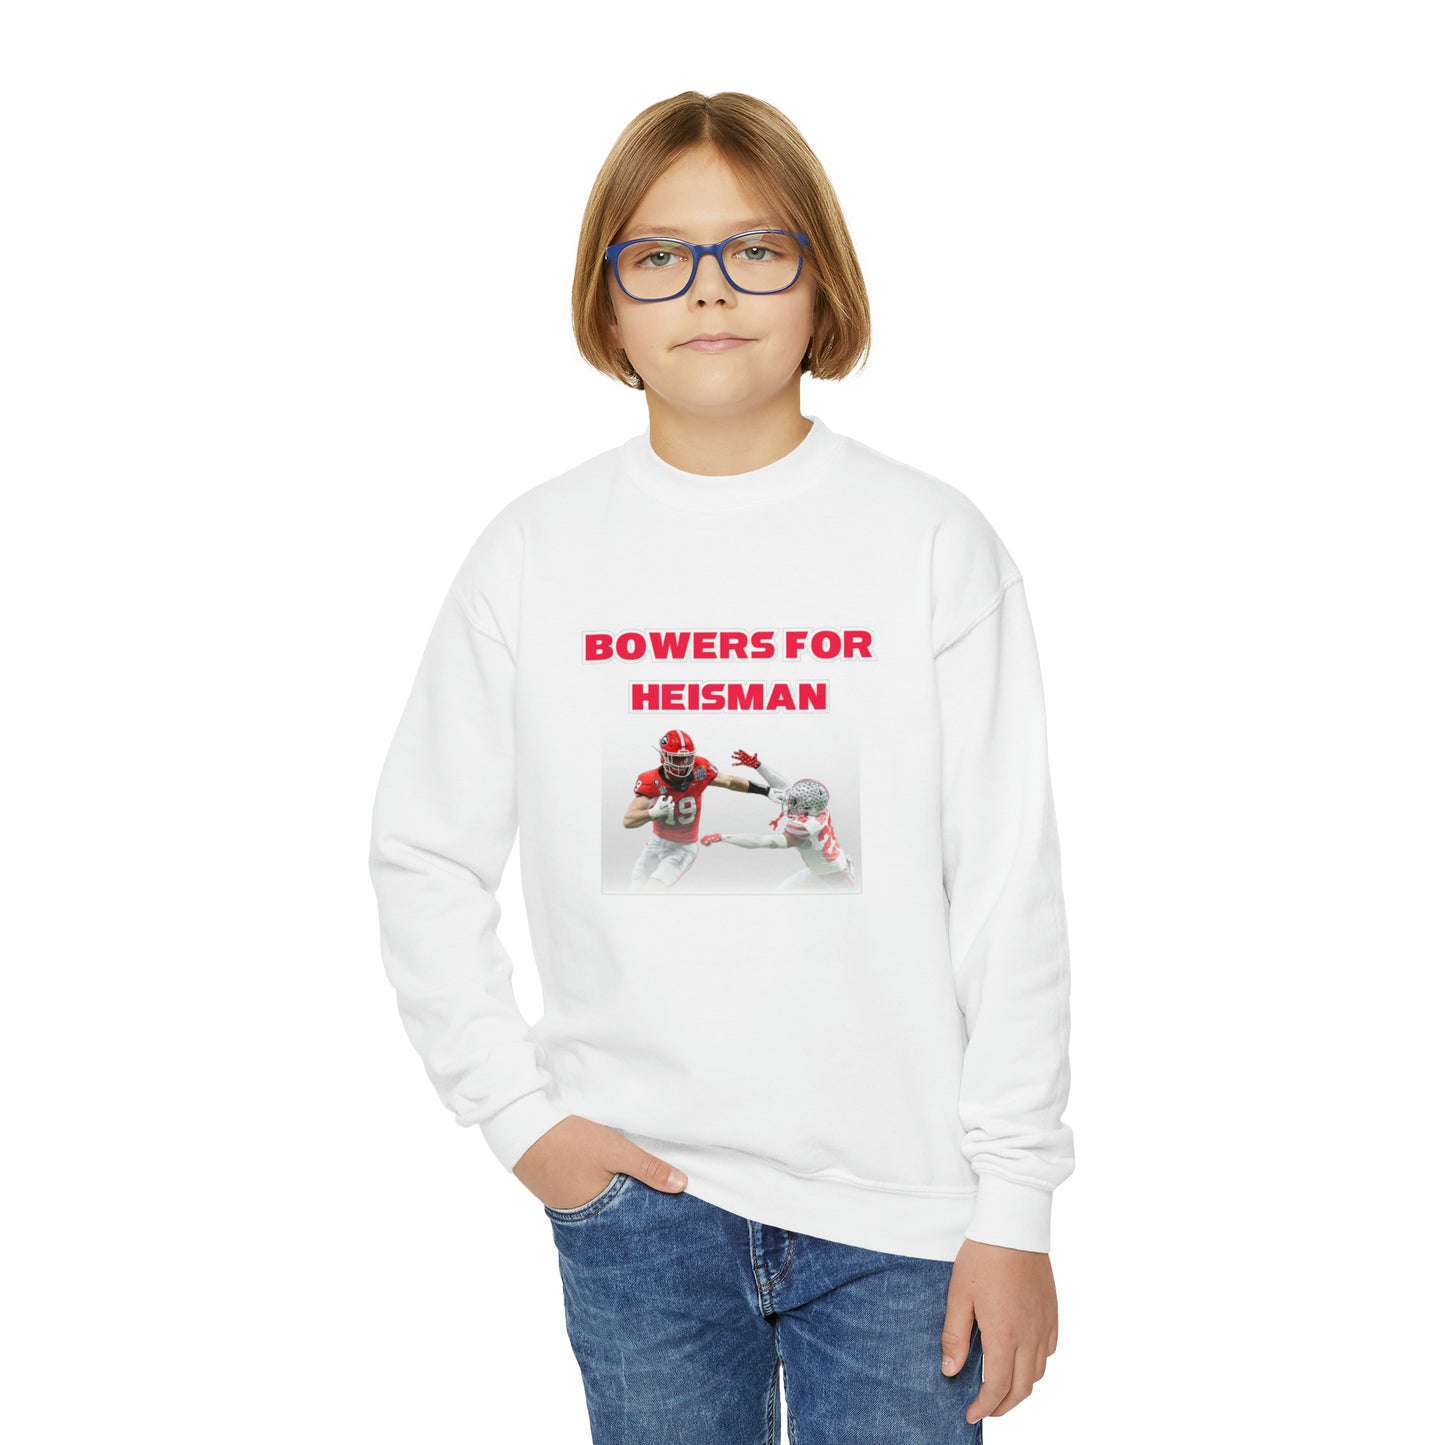 Bowers for Heisman Youth Crewneck Sweatshirt